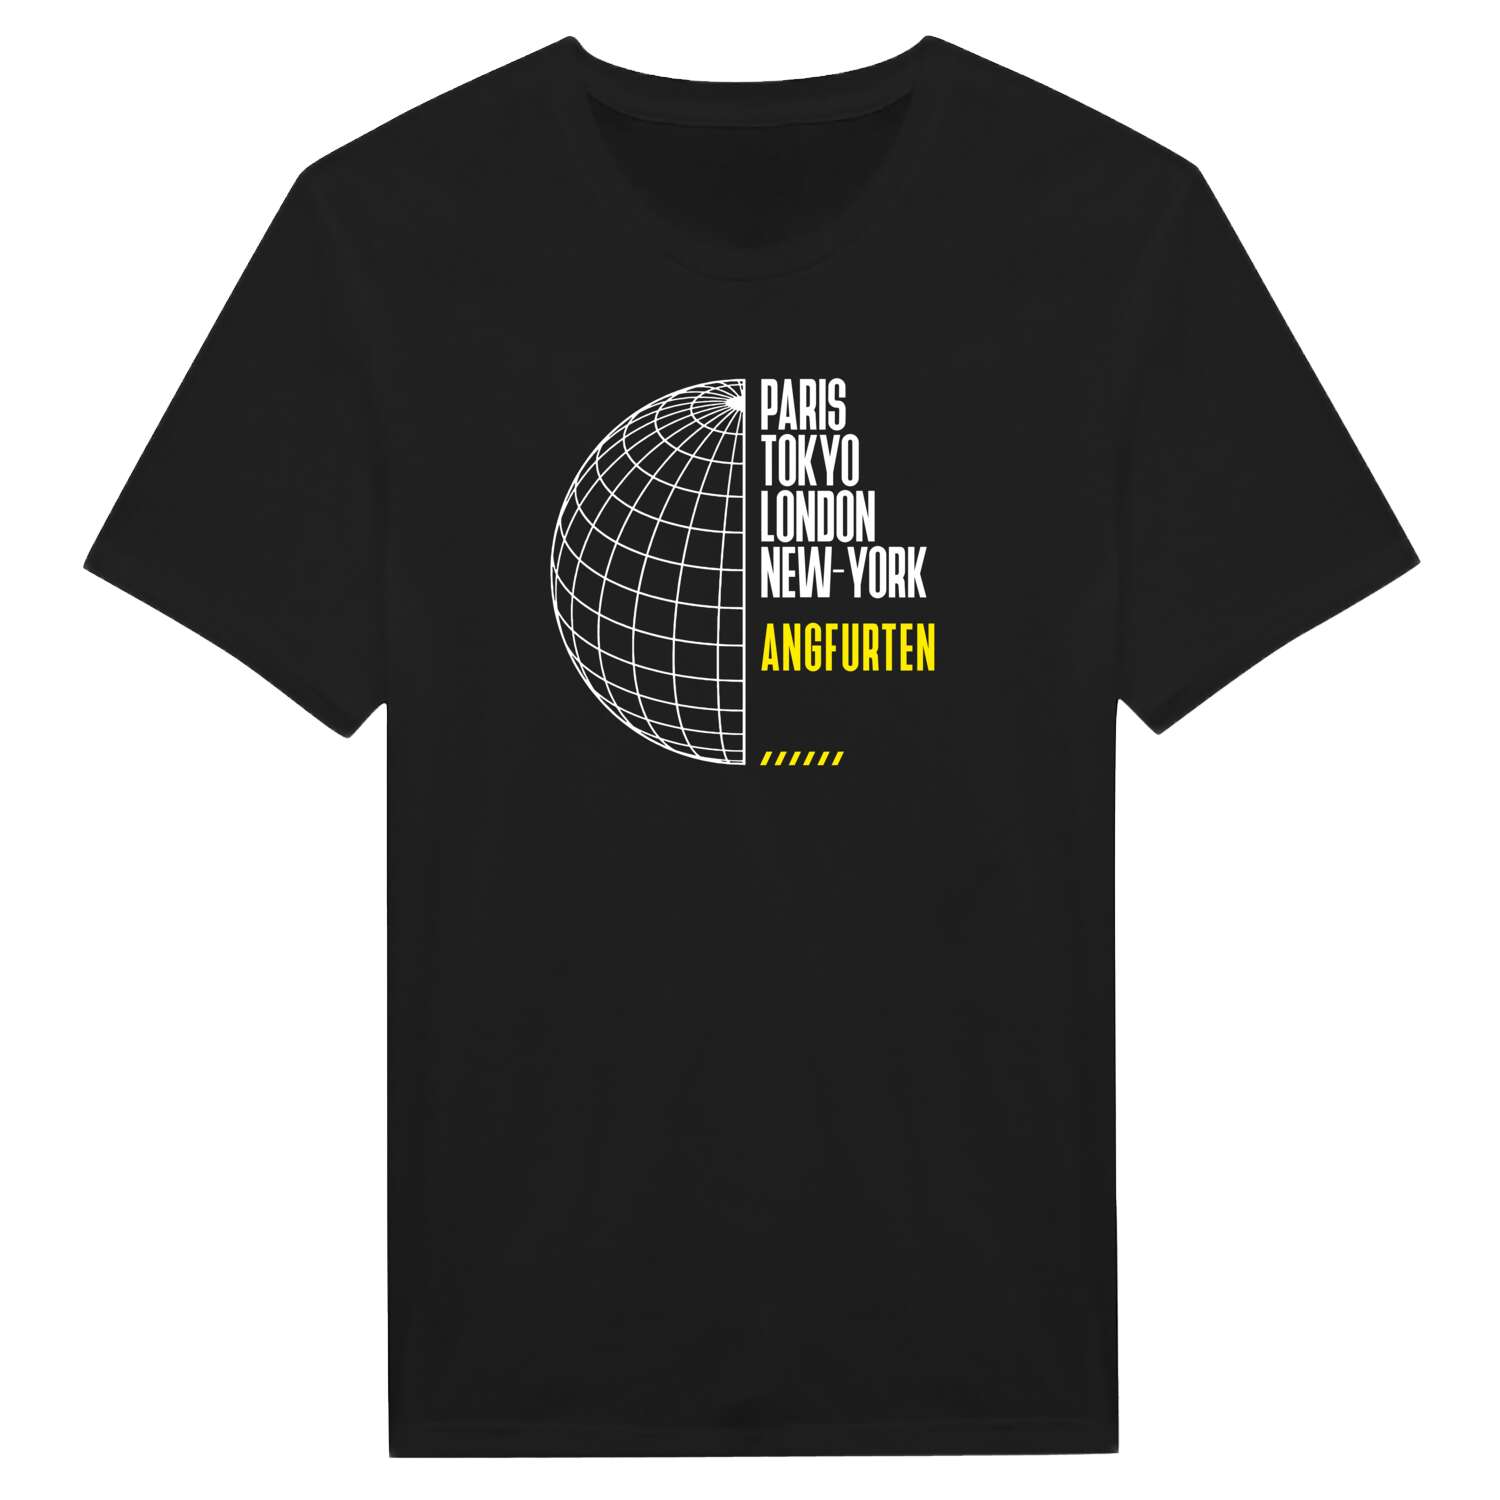 Angfurten T-Shirt »Paris Tokyo London«